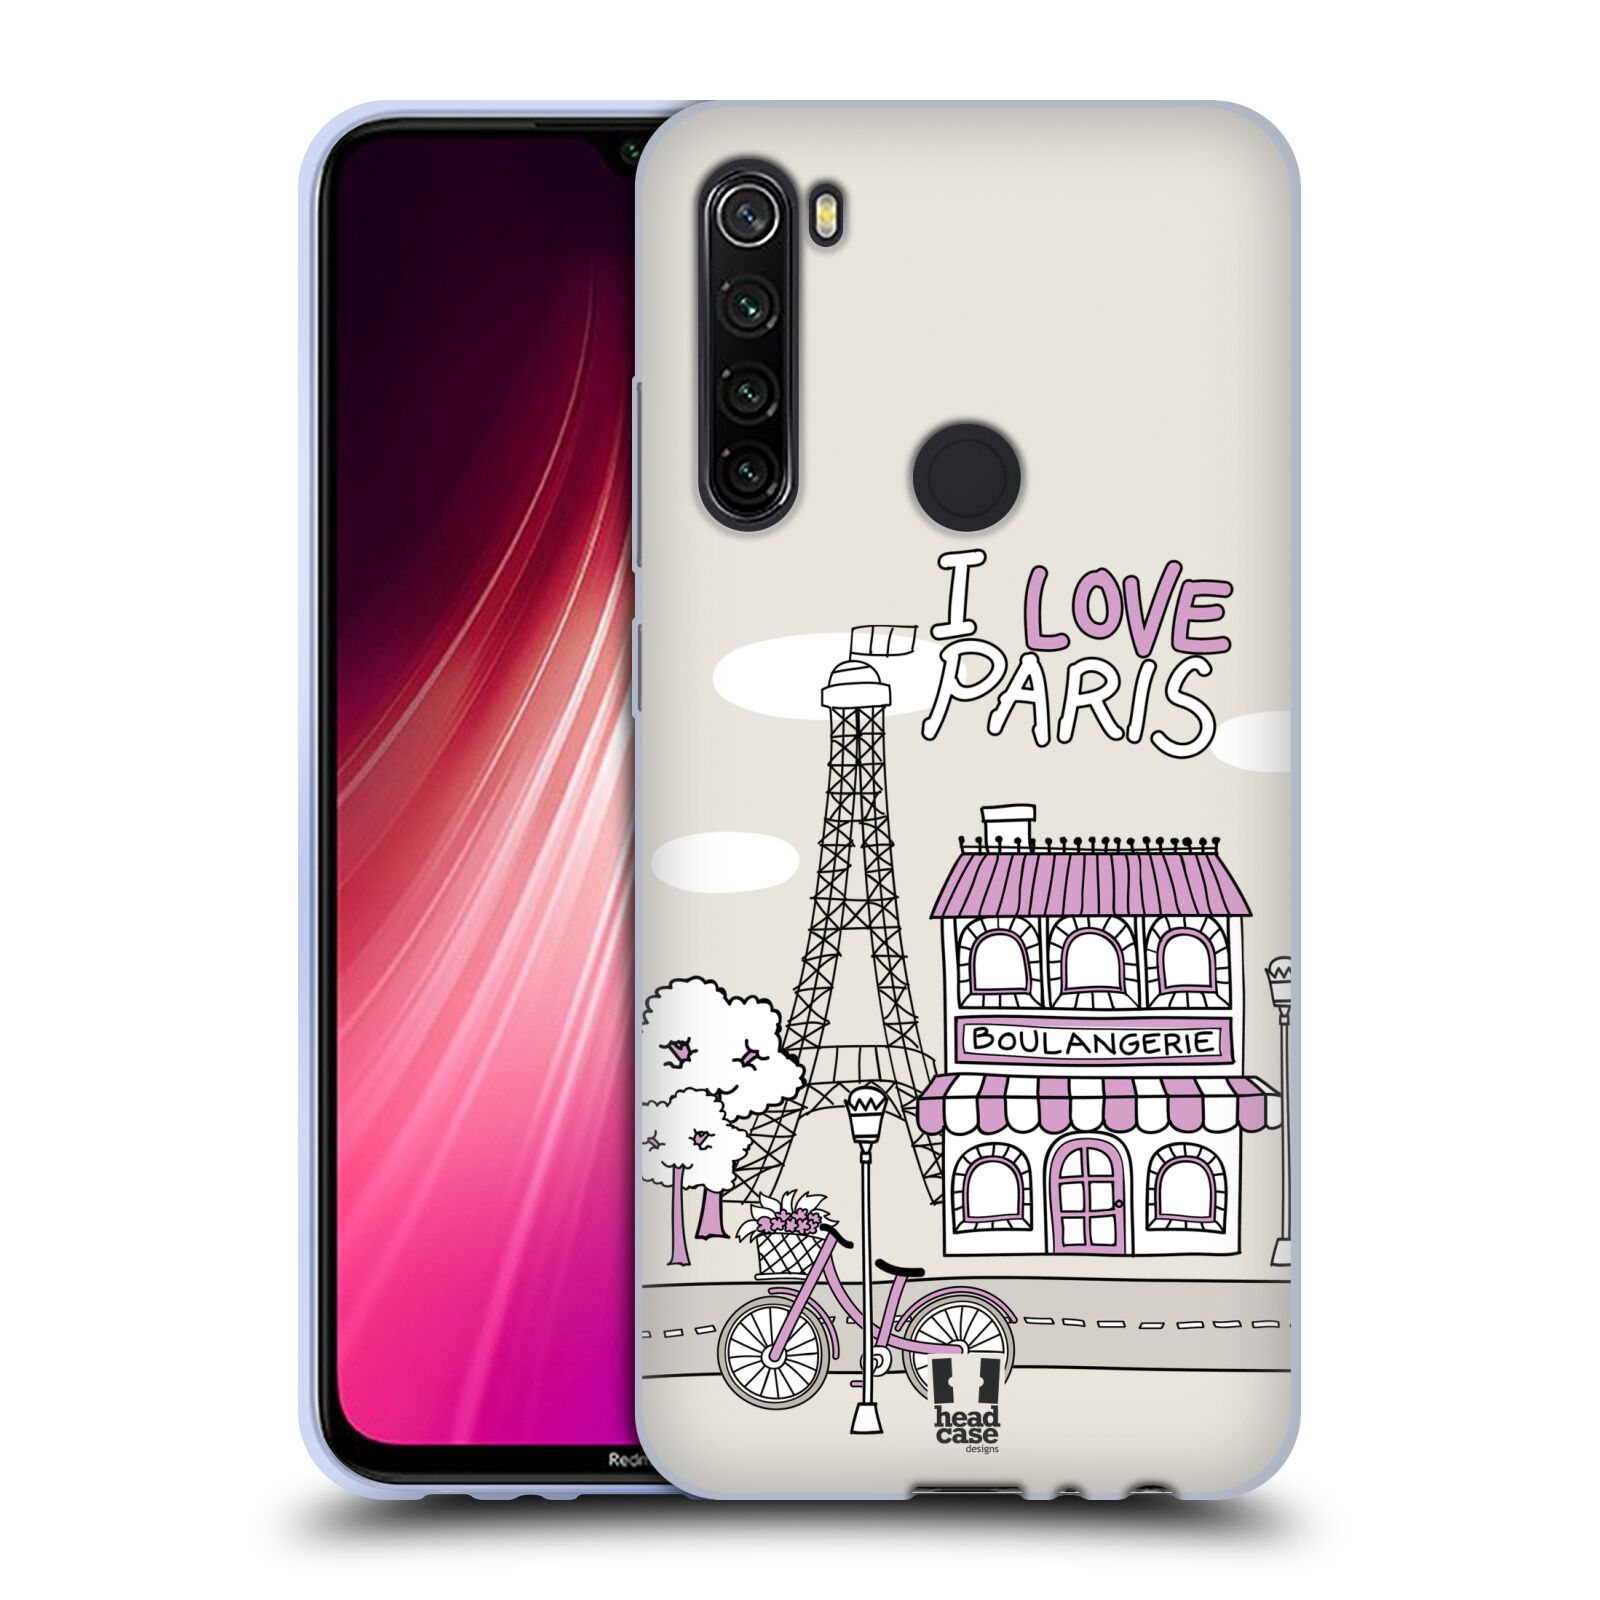 Plastový obal HEAD CASE na mobil Xiaomi Redmi Note 8T vzor Kreslená městečka FIALOVÁ, Paříž, Francie, I LOVE PARIS